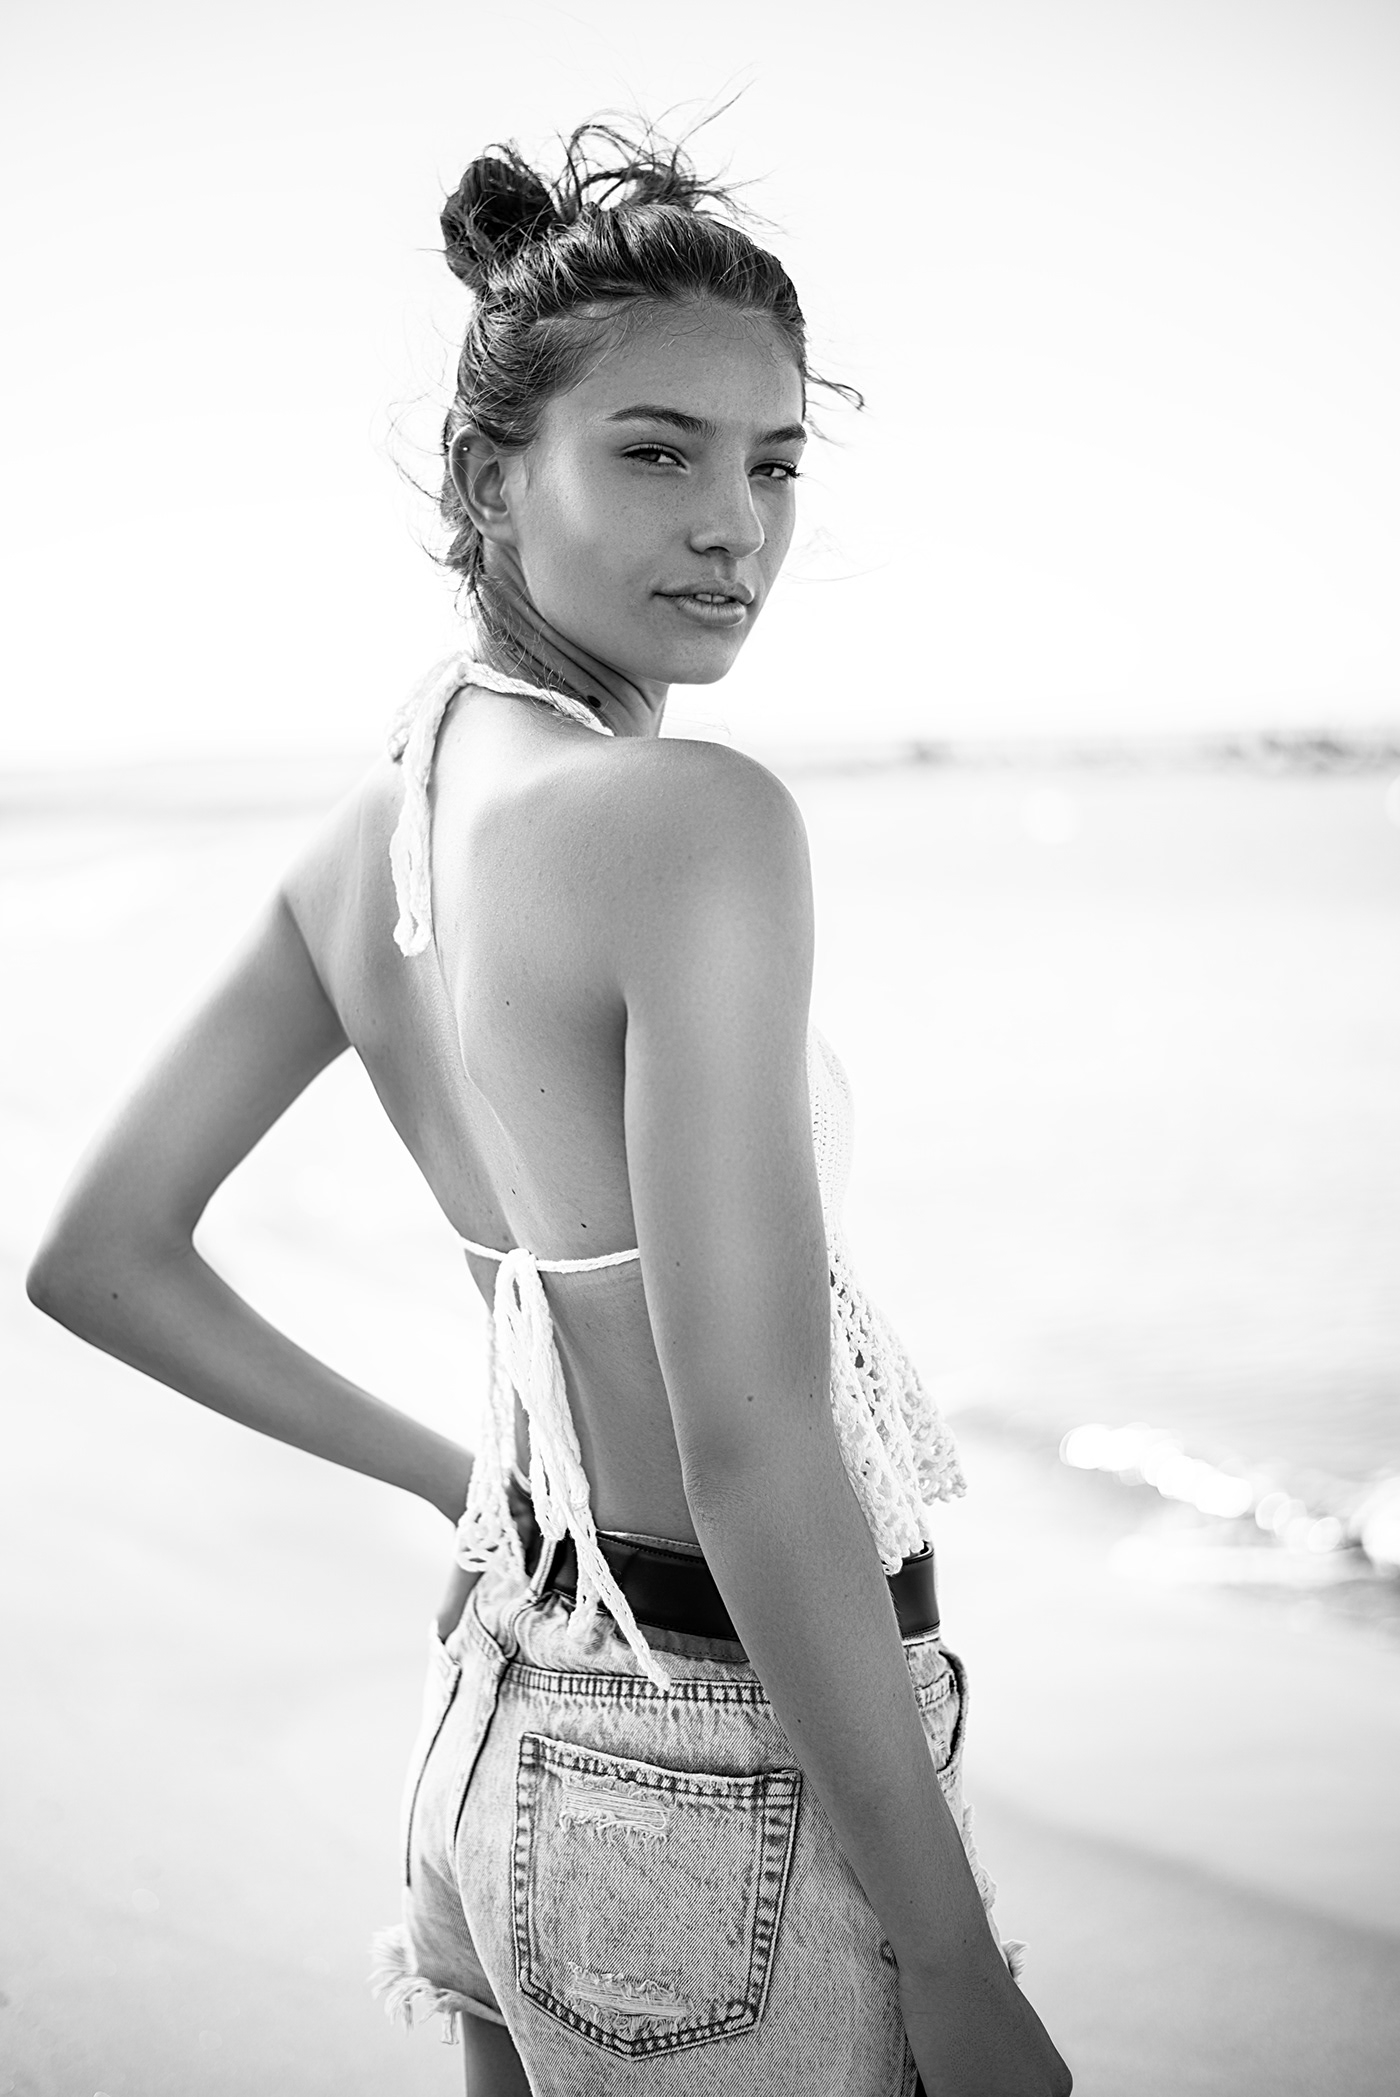 enjoymodels Fashion  beach morningshoot naturallight girl Testshoot photographer